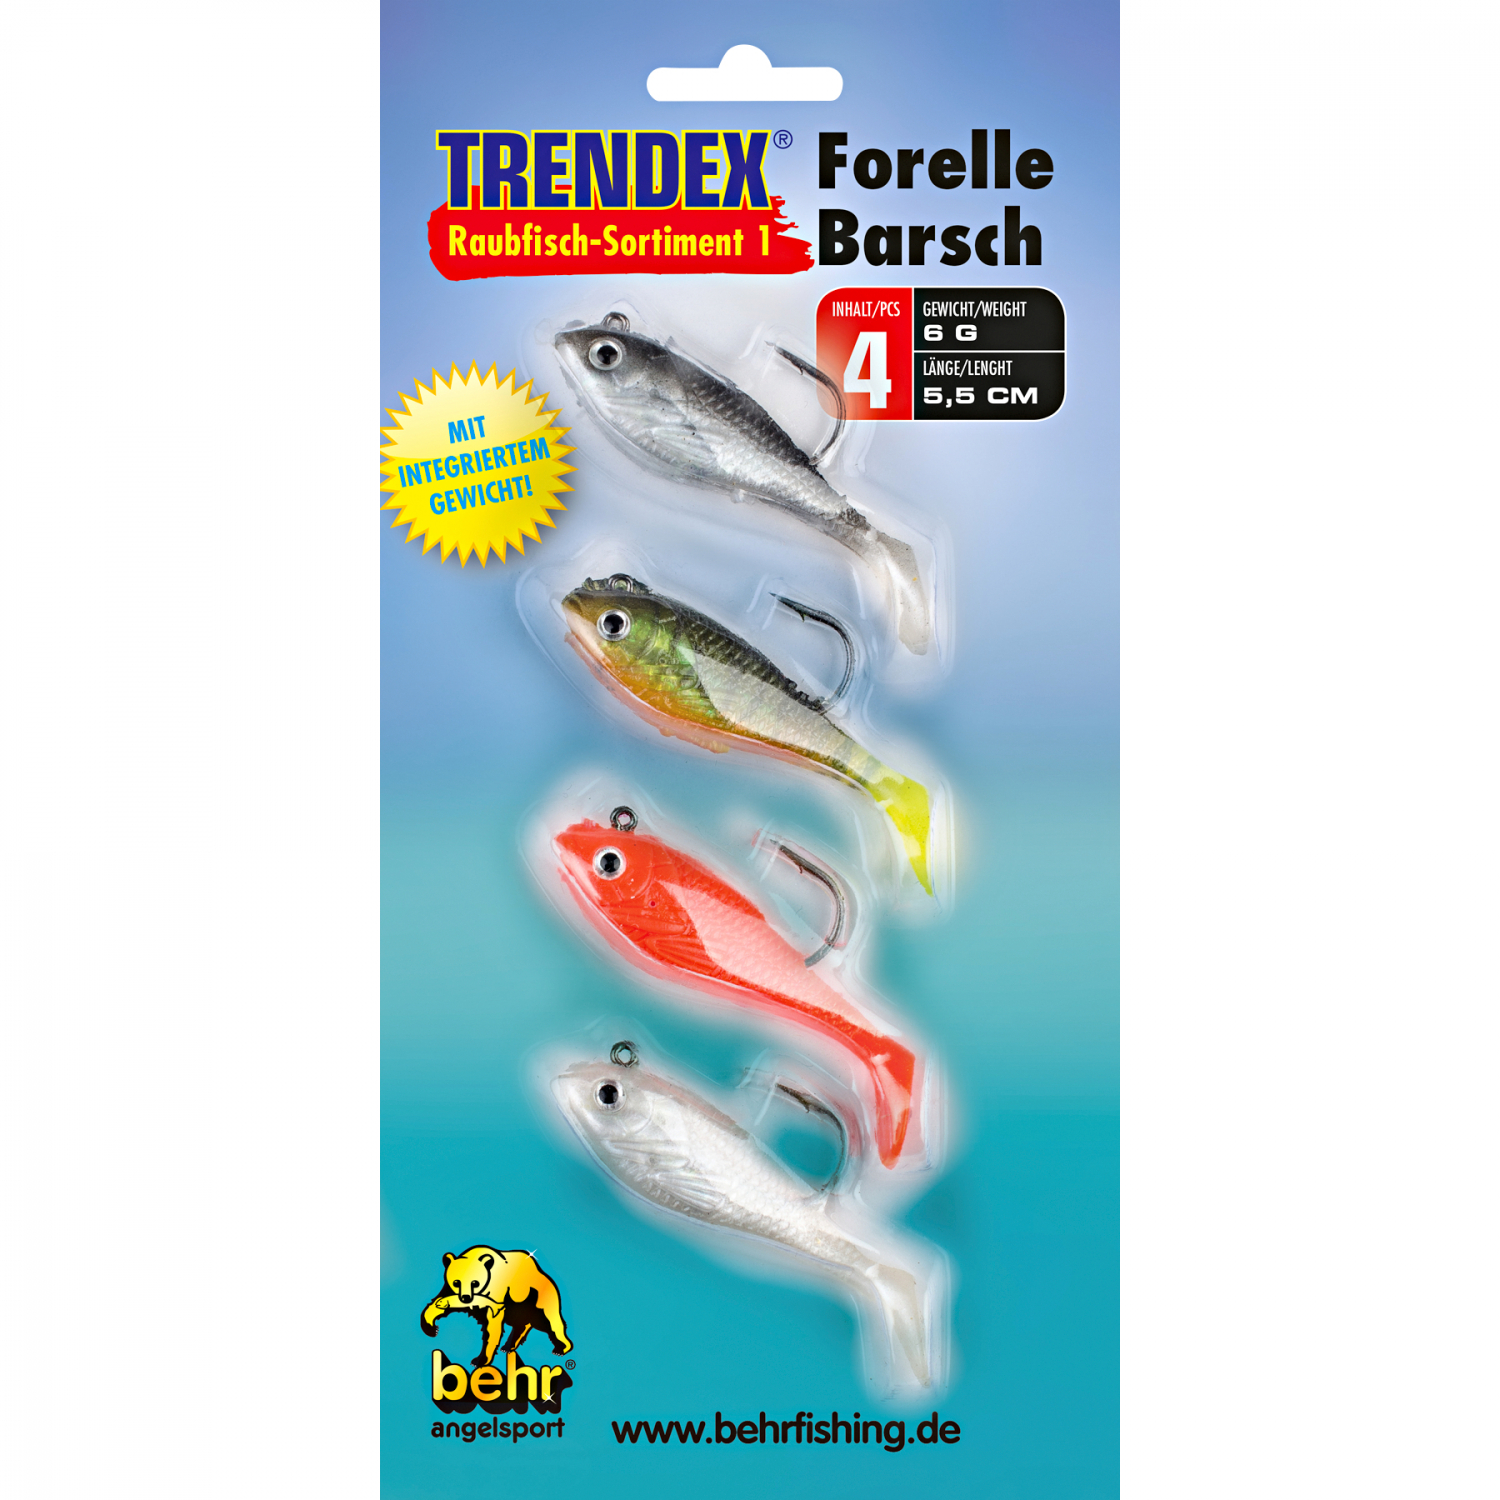 Trendex Softbait Predator Lures Assortment 1 (Trout/Perch) at low prices